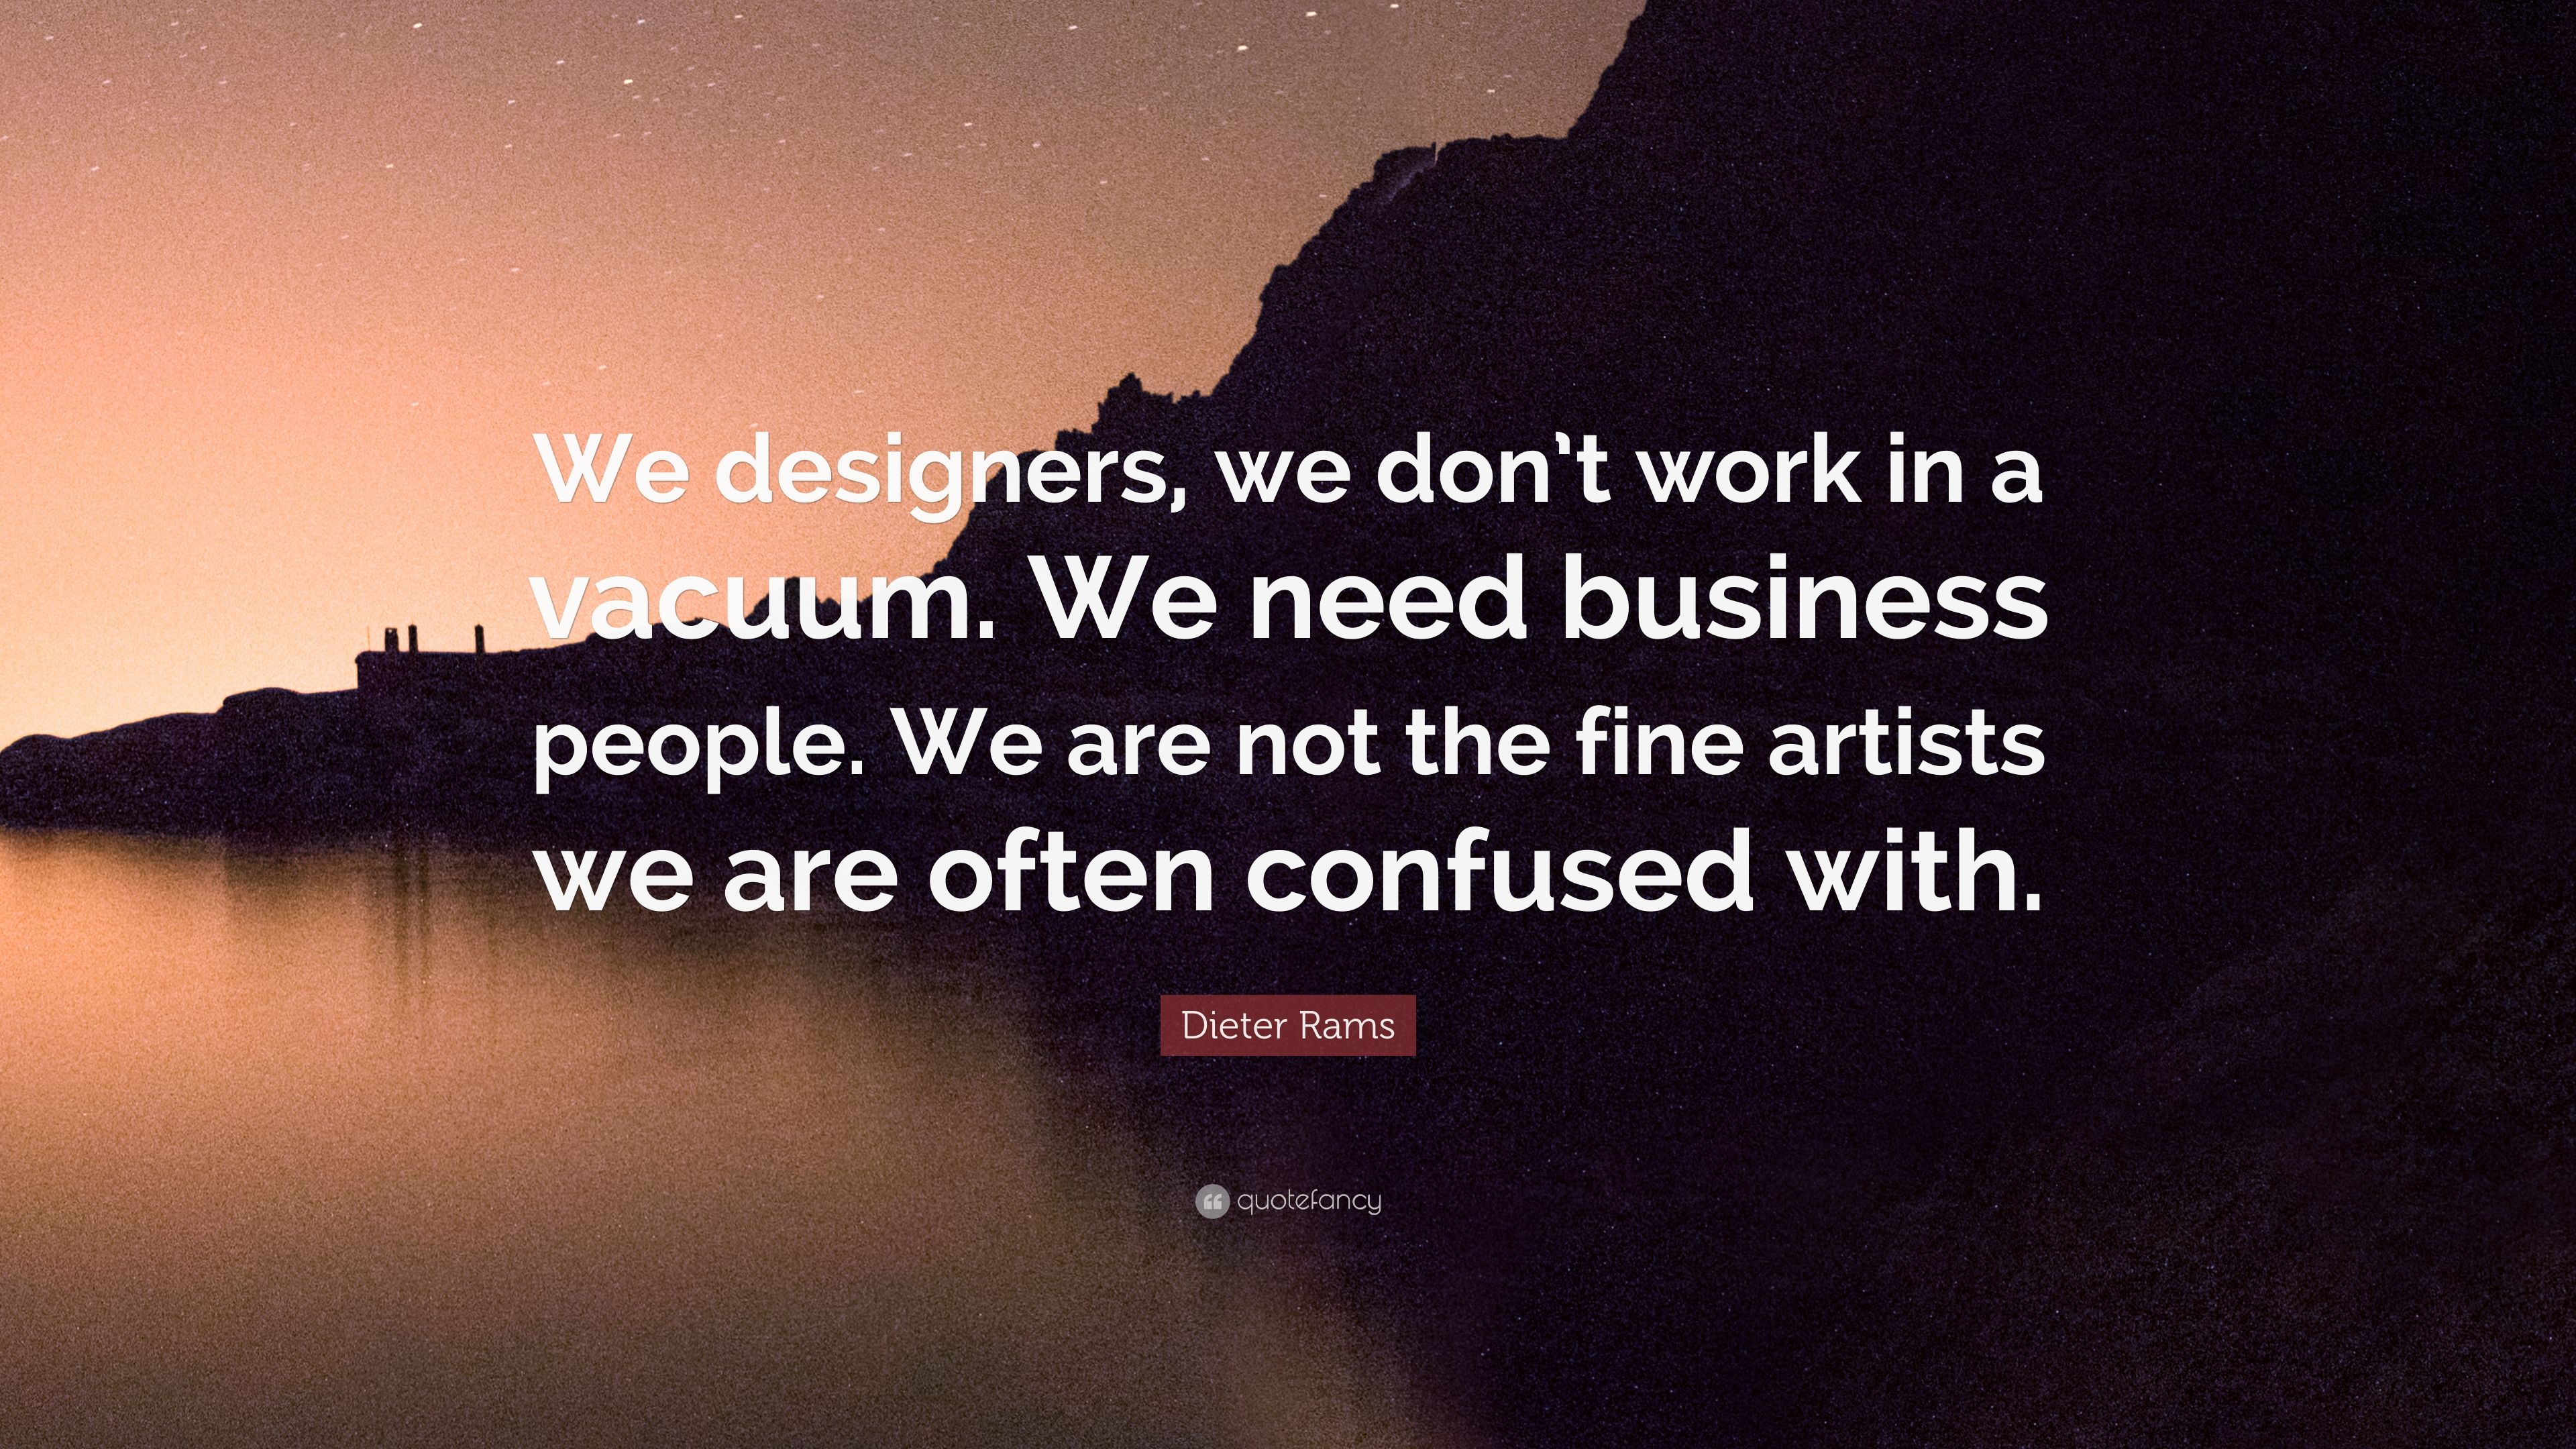 Dieter Rams Quote: “We designers, we don't work in a vacuum. We